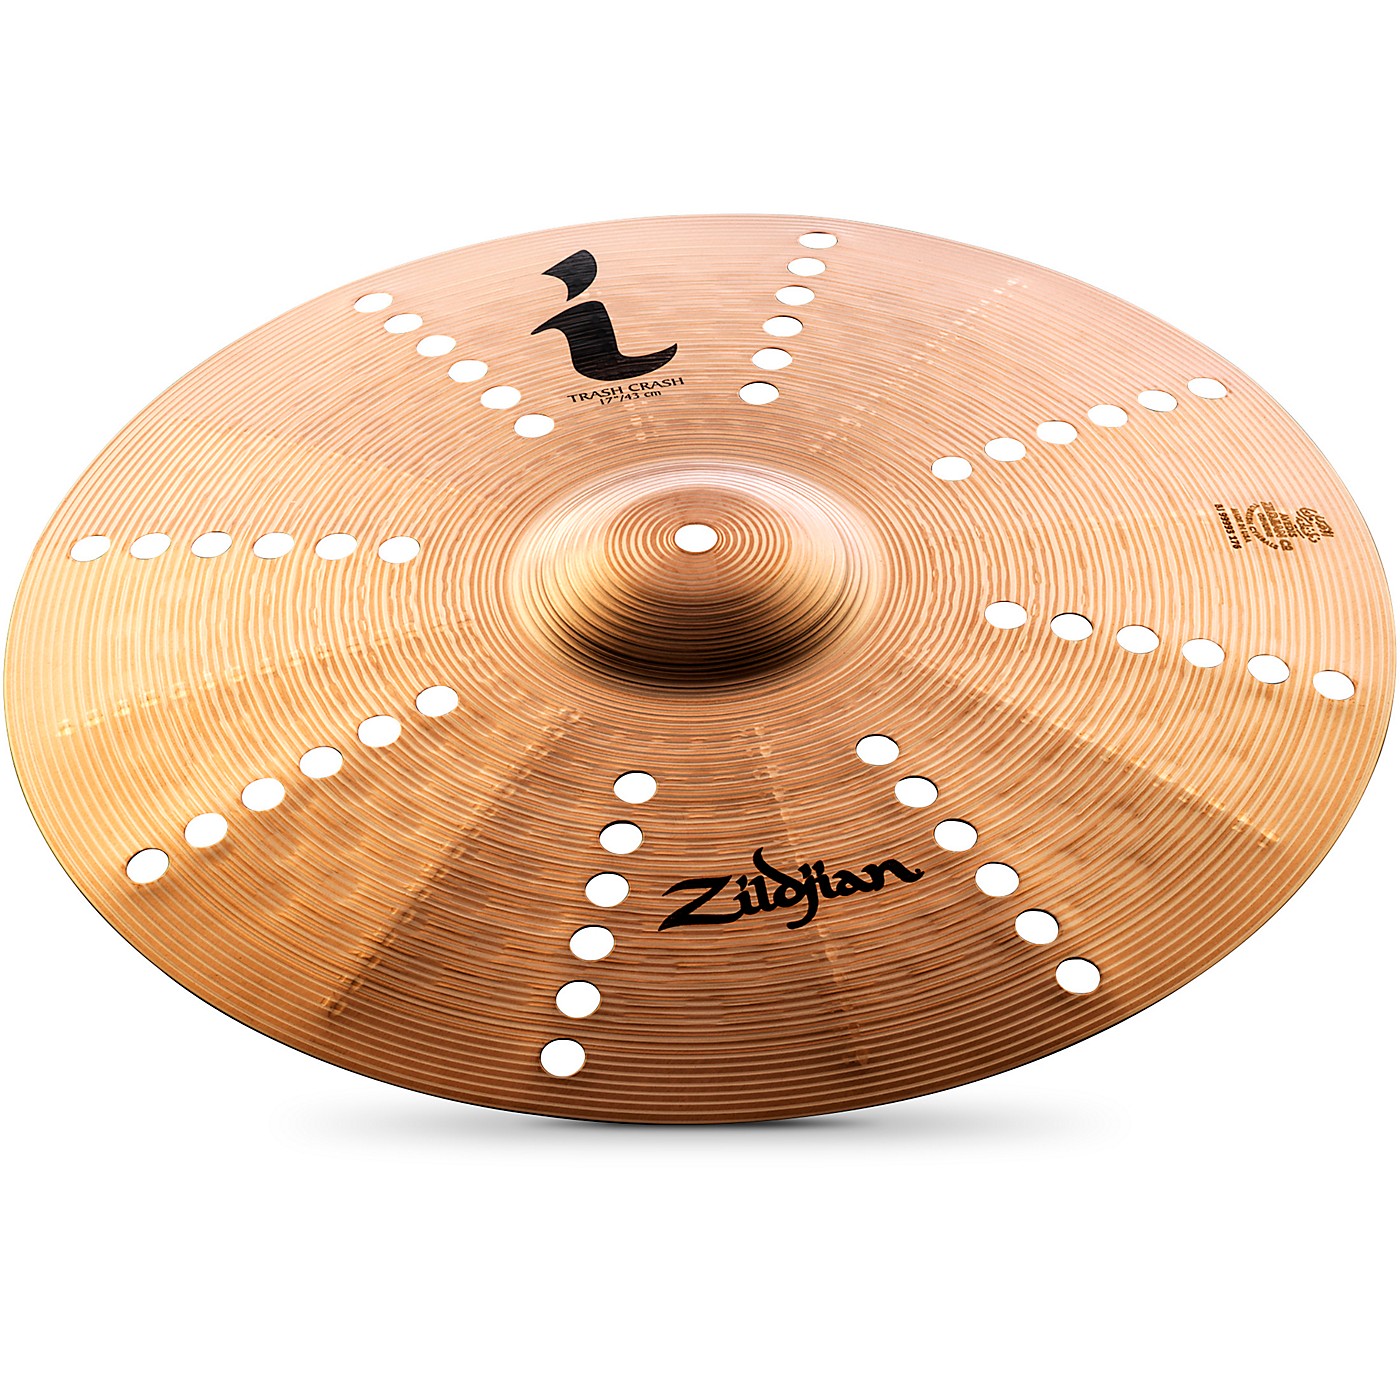 Zildjian I Series EFX Cymbal thumbnail